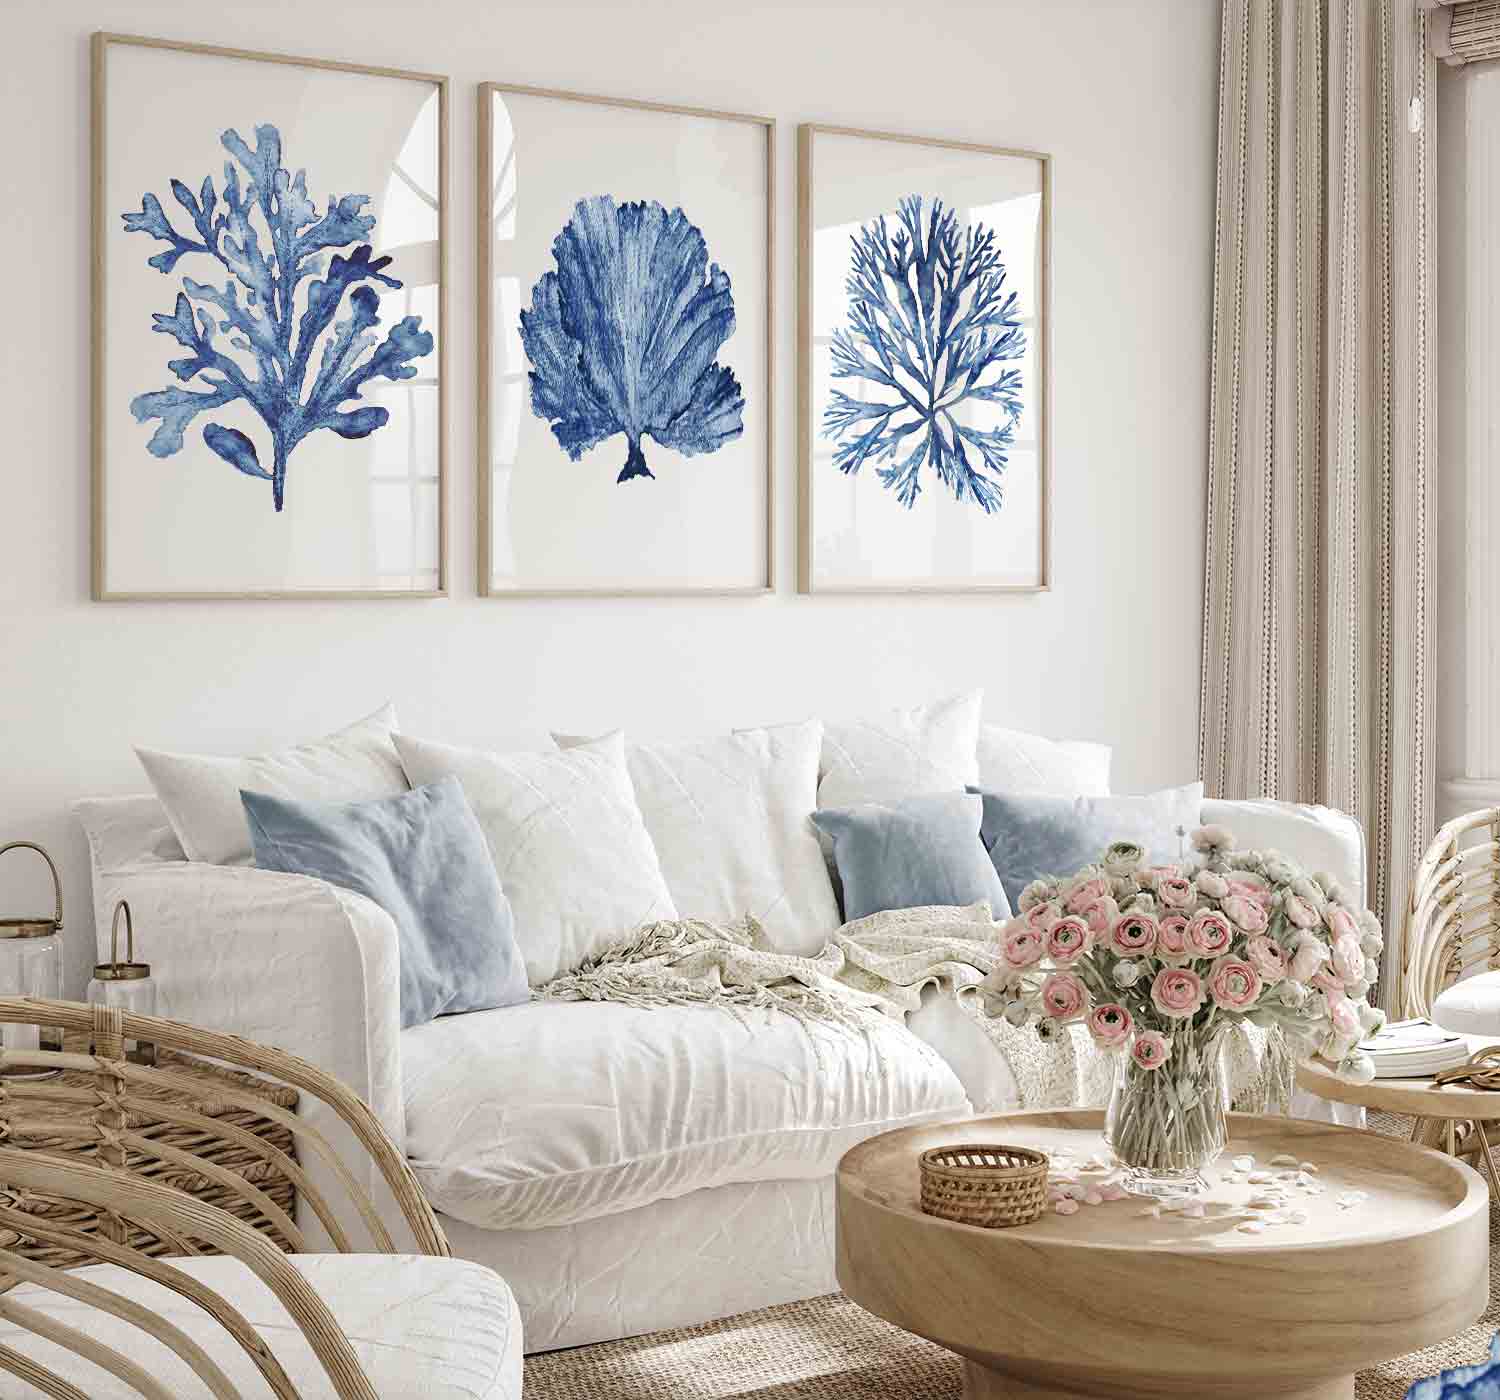 Set of 3 Wall Art Prints - Blue Coral Wall Art Set in Living Room - Driftwood Interiors 